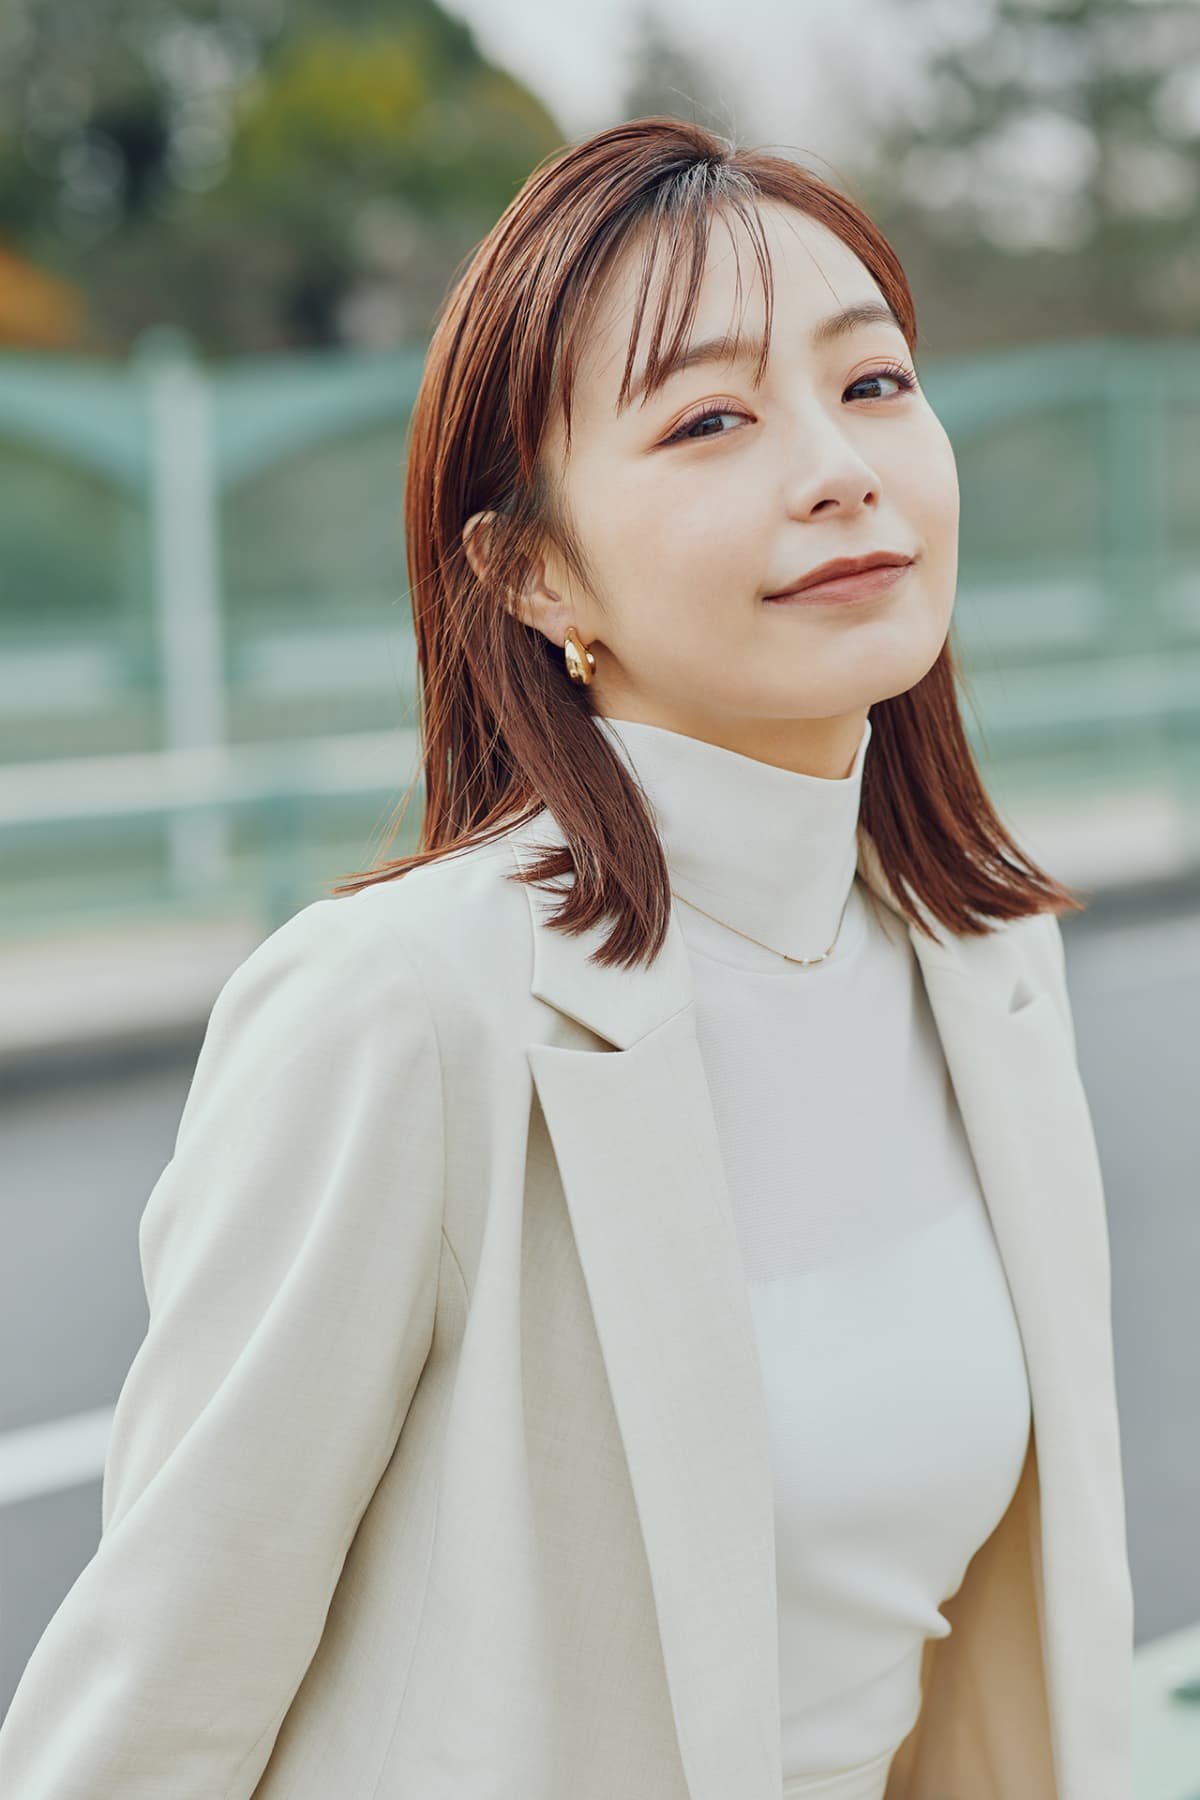 CELFORD/宇垣美里/model actress